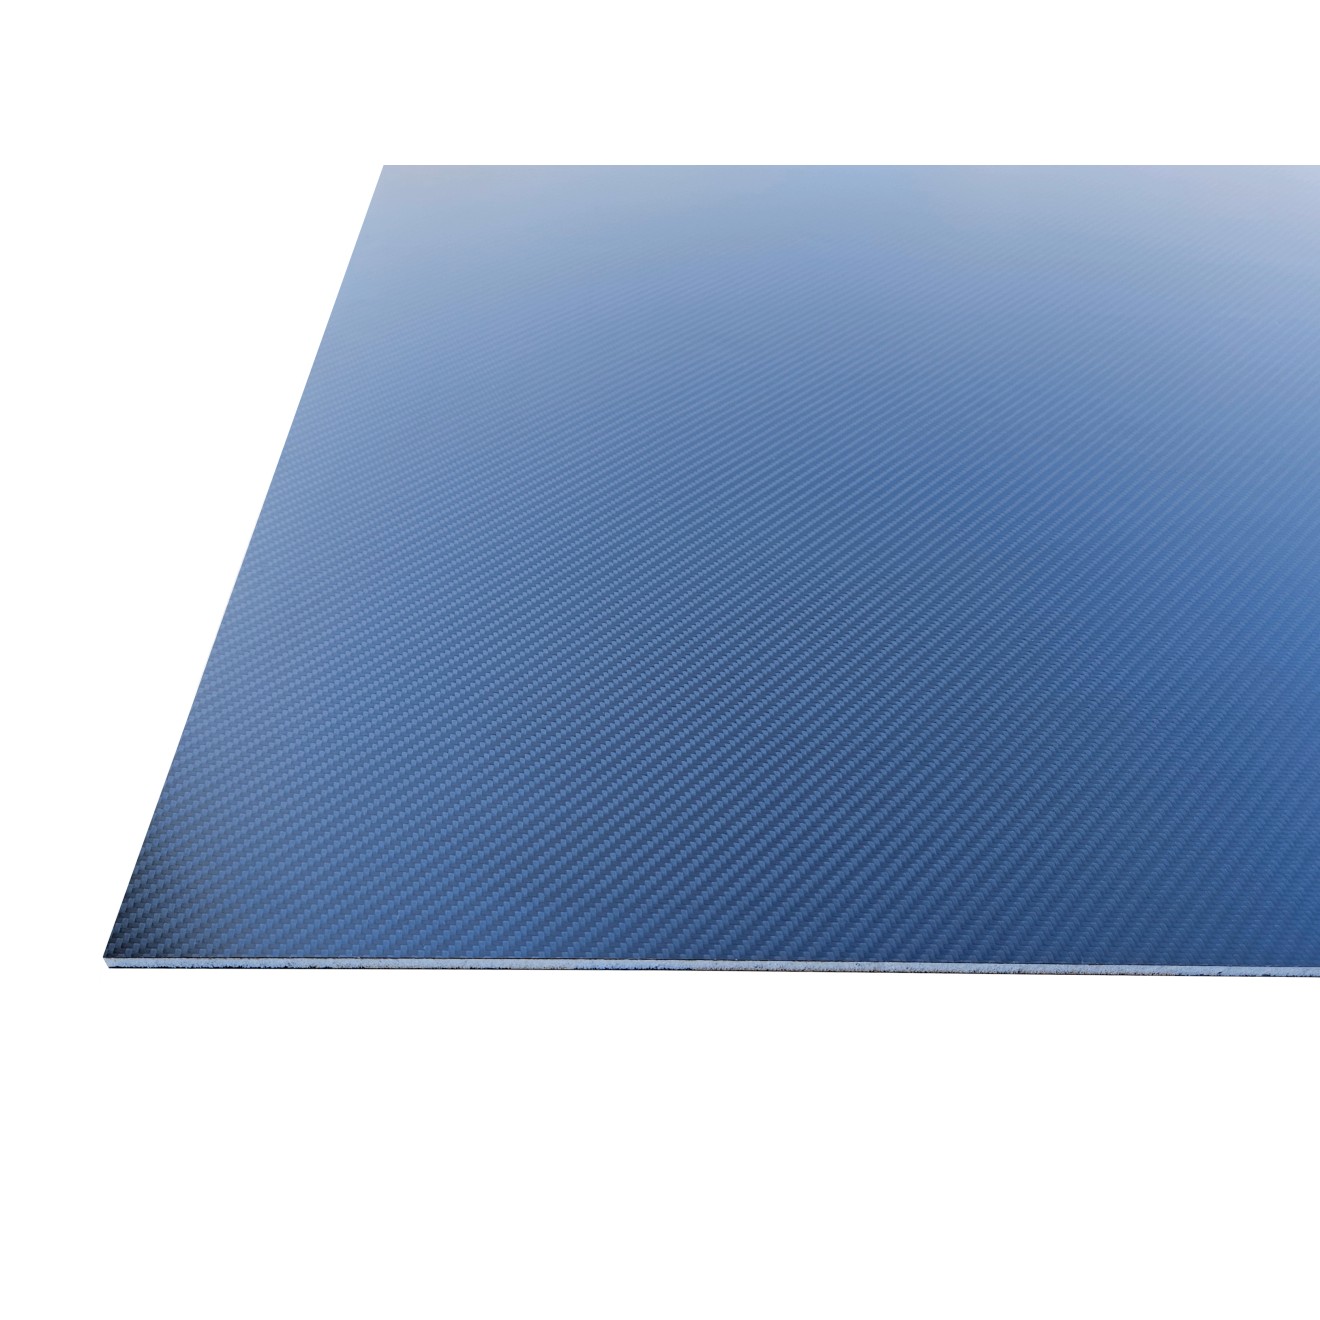 Xellentic® CF sandwich sheets with Rohacell® 51 IGF core, 1220x970x6mm, surface matt finish